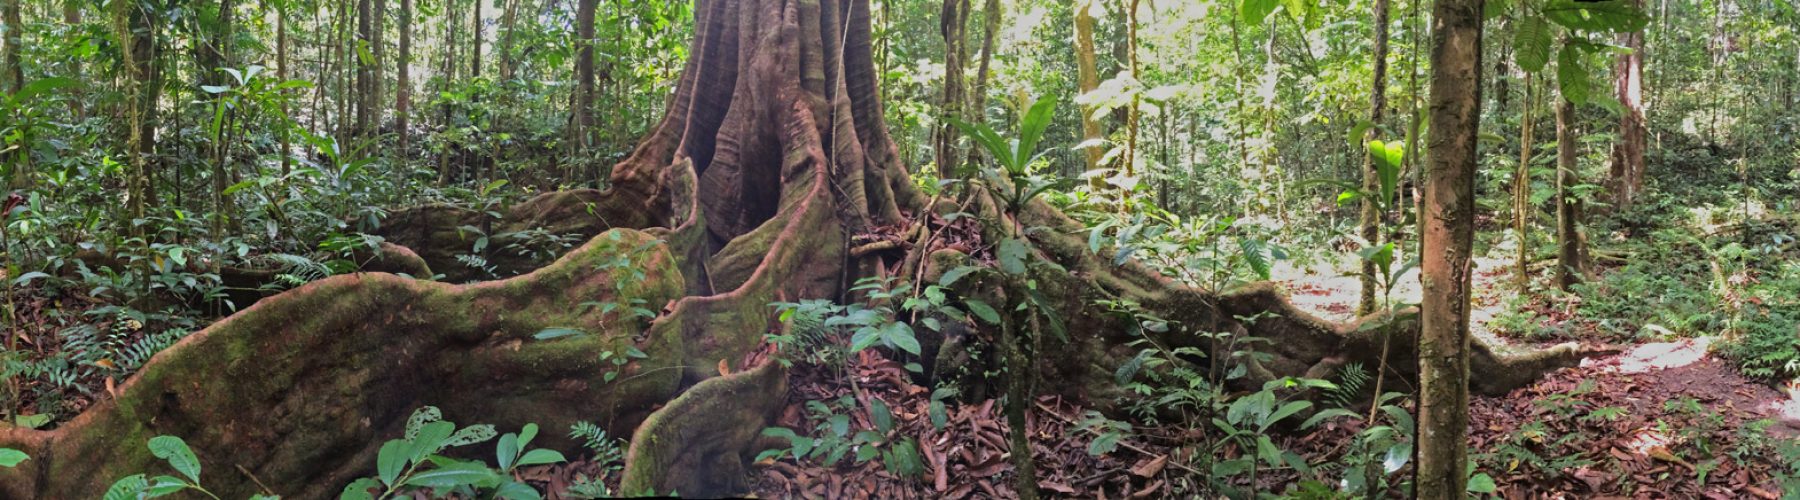 Large-tree-Vuale-Creek-Kokoda